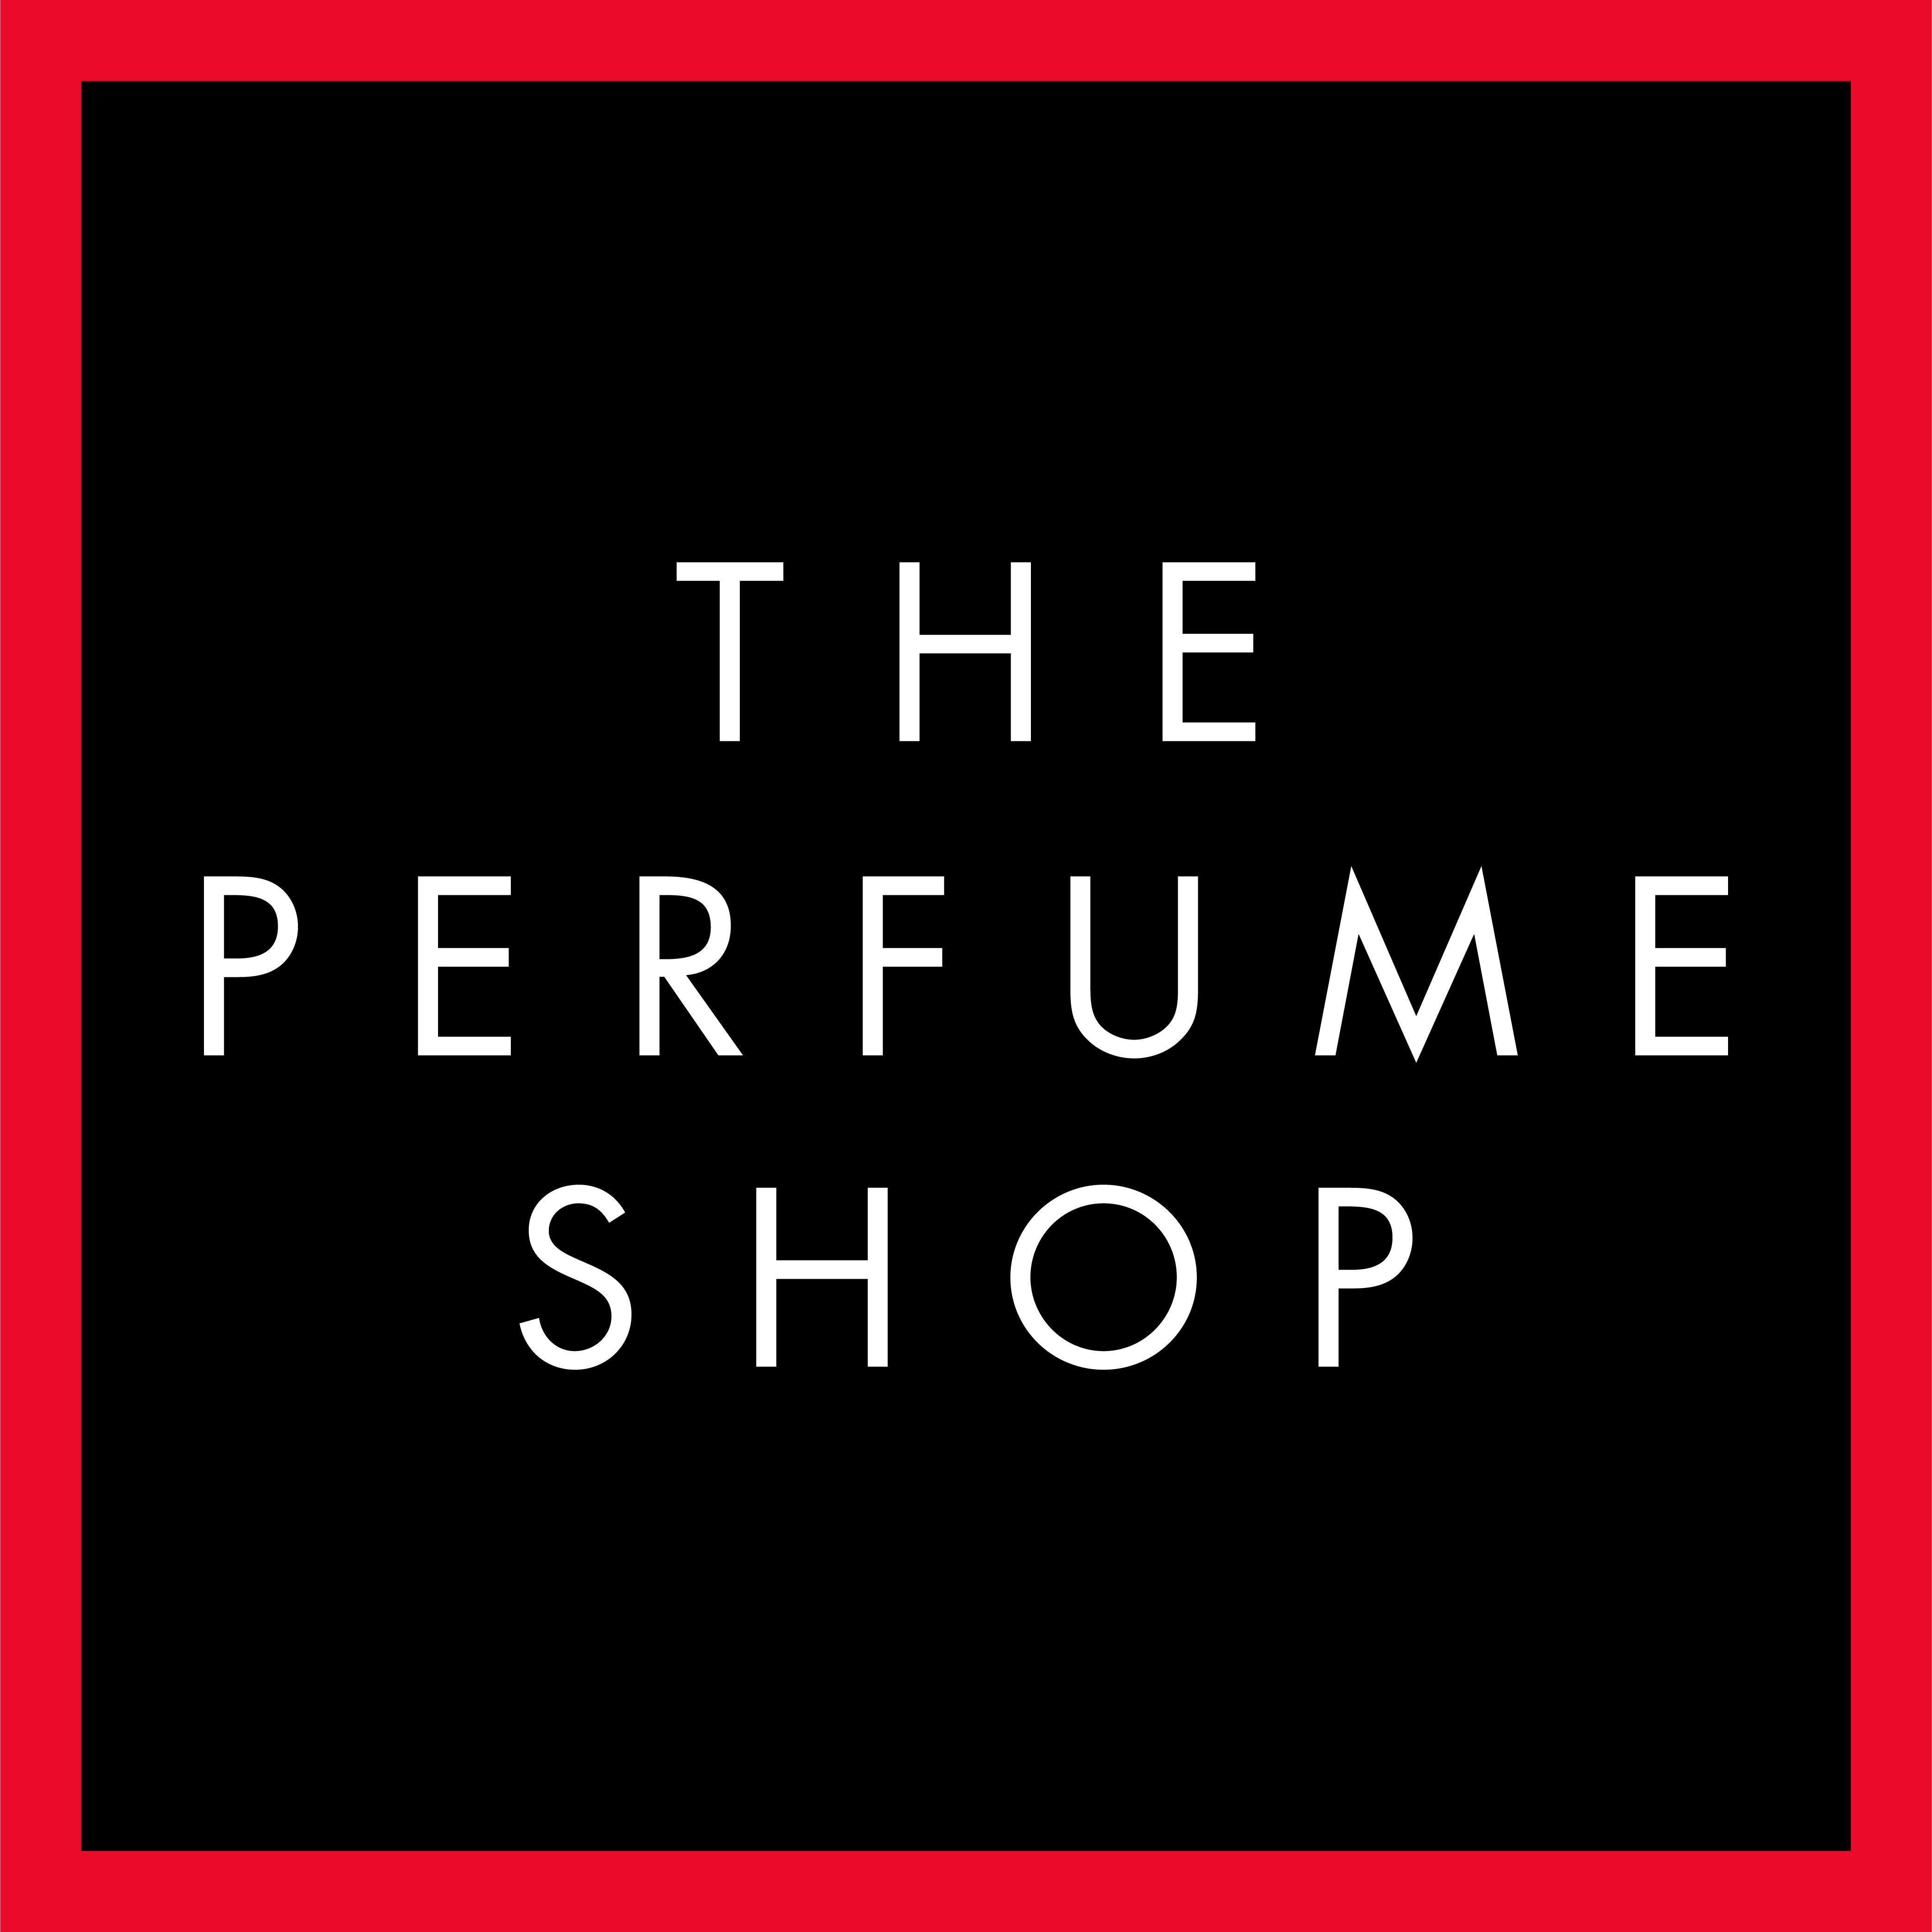 The Perfume Shop discounts plus get 20% off second item